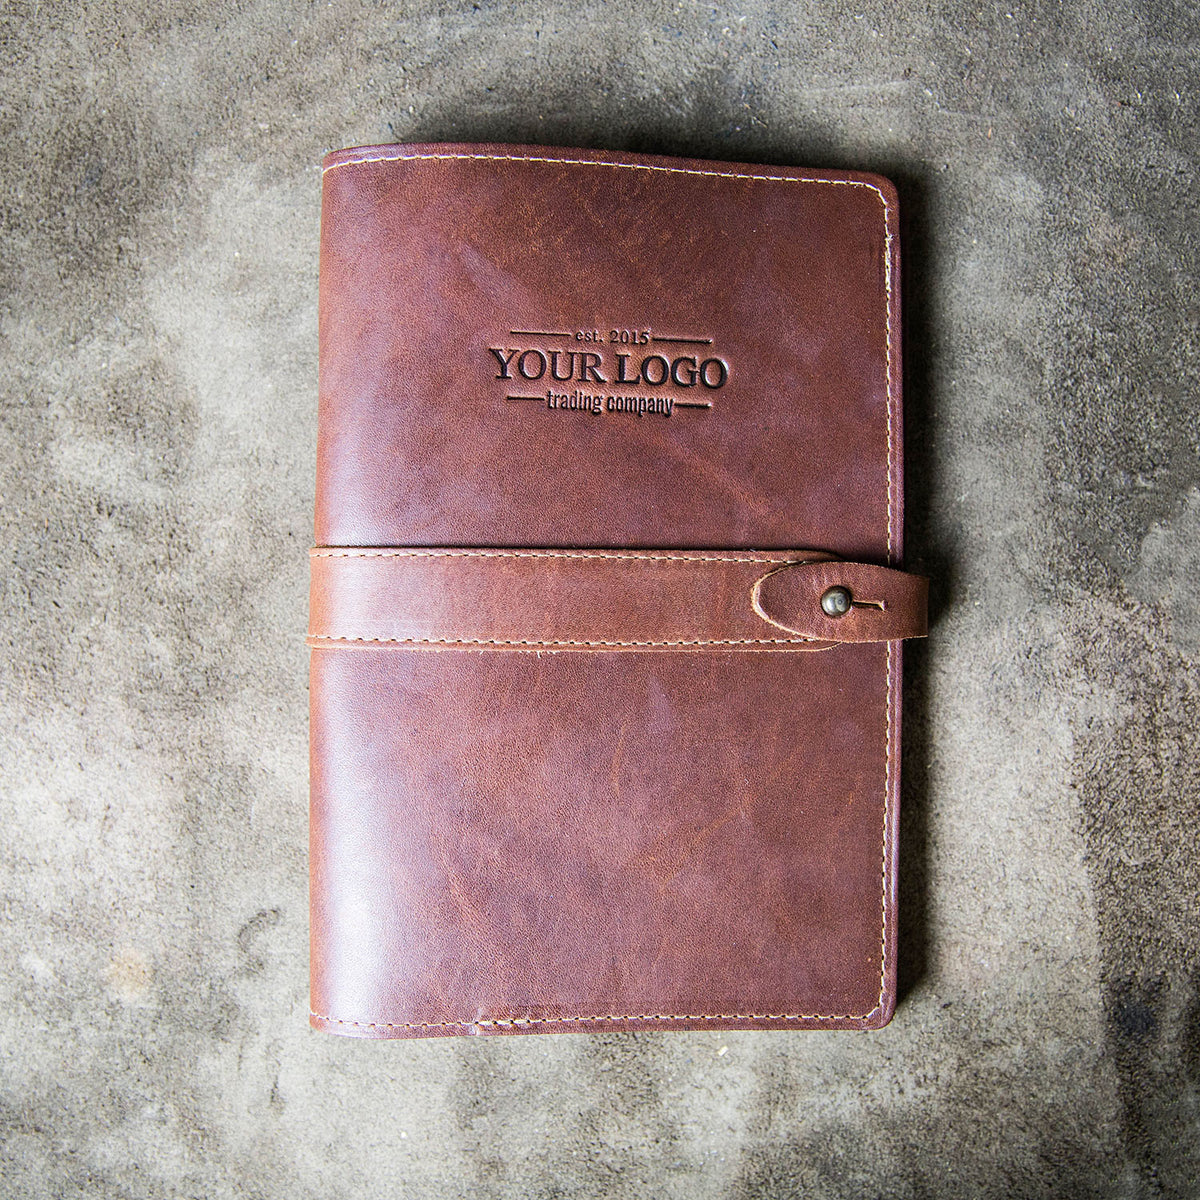 Mini Sketchbook Journal, Leather Journal Women, Personalized